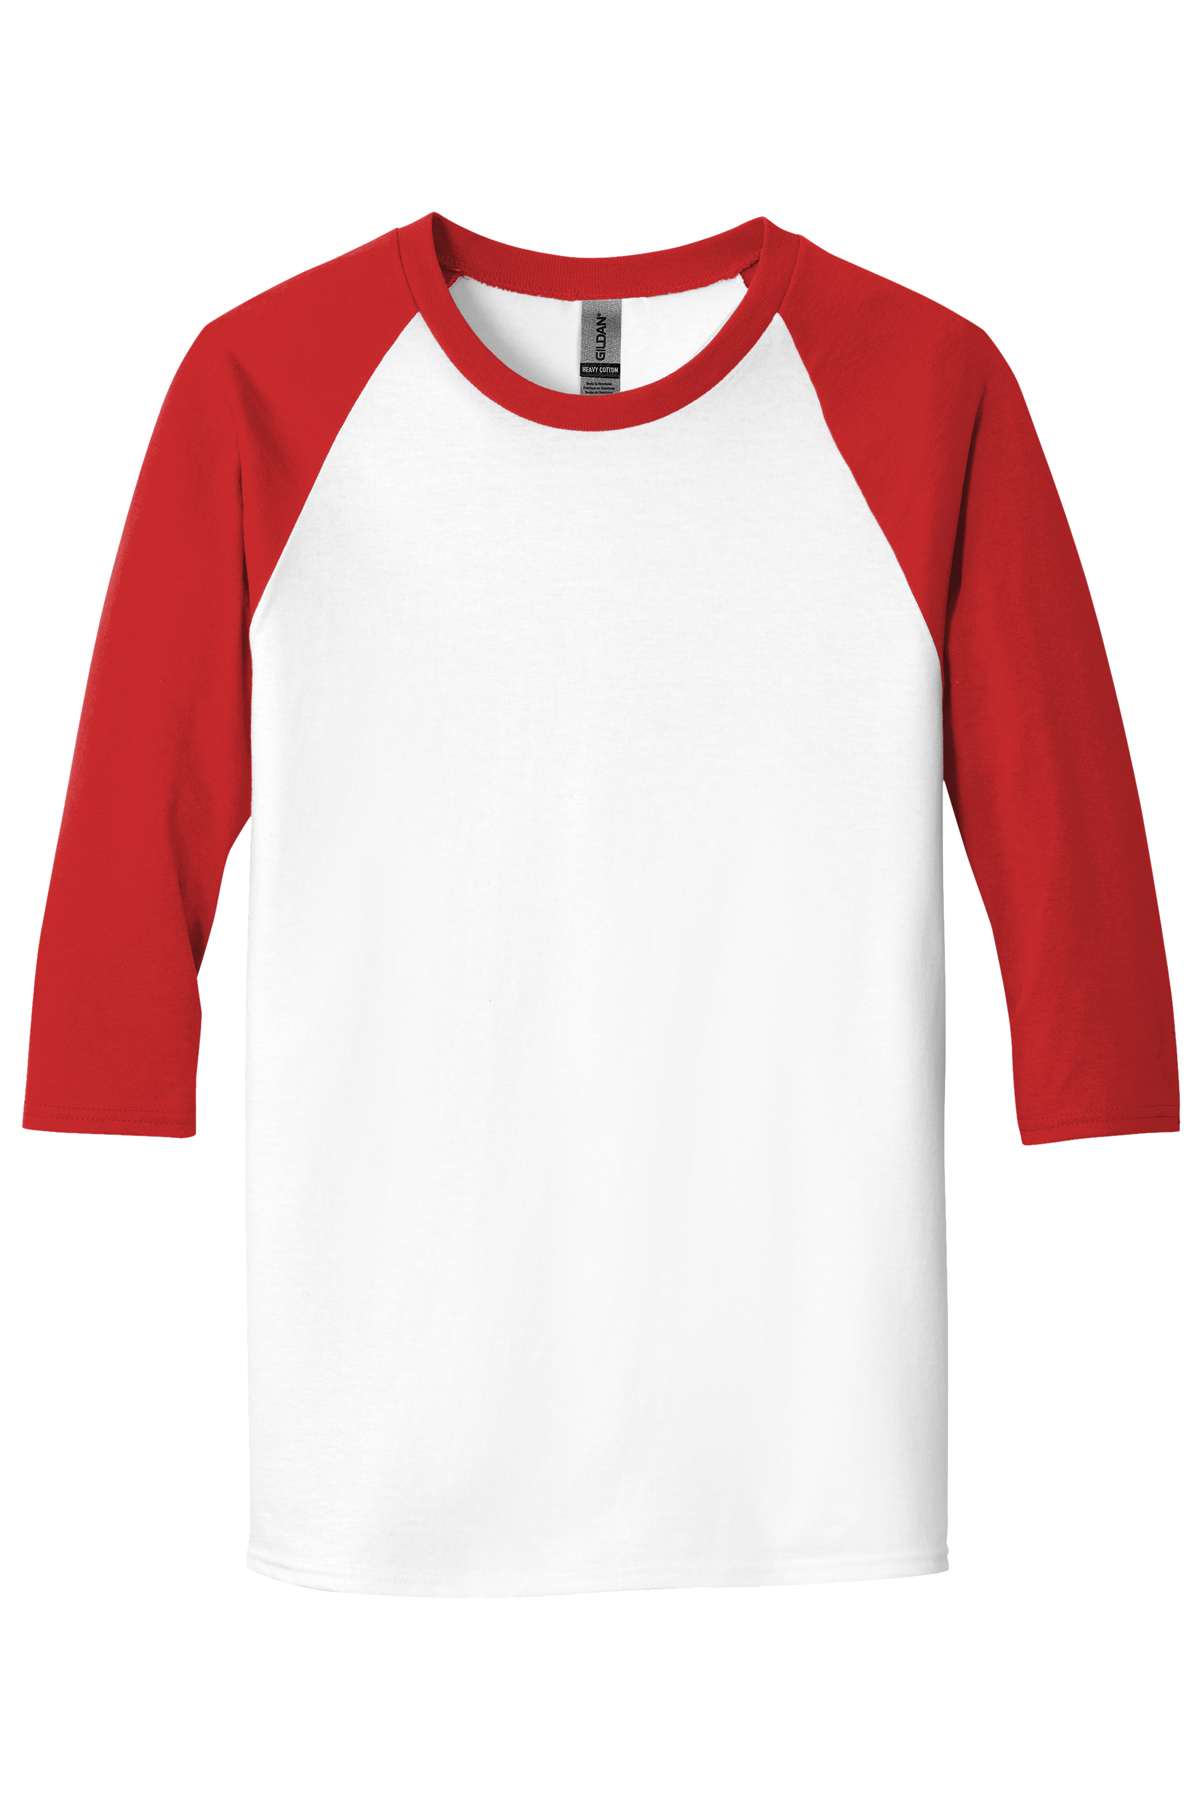 Texas Rangers Raglan T Shirt/ Adult (S) 3/4 Sleeve/ Cotton Blend SLIM